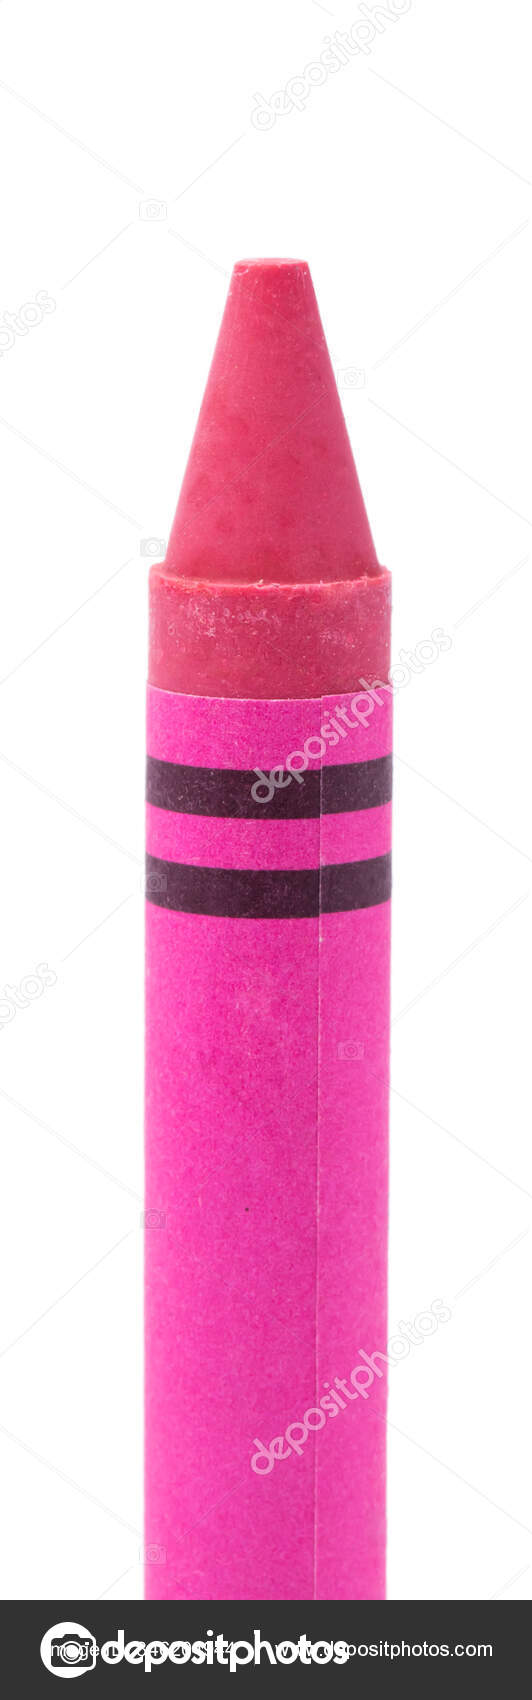 crayon pink